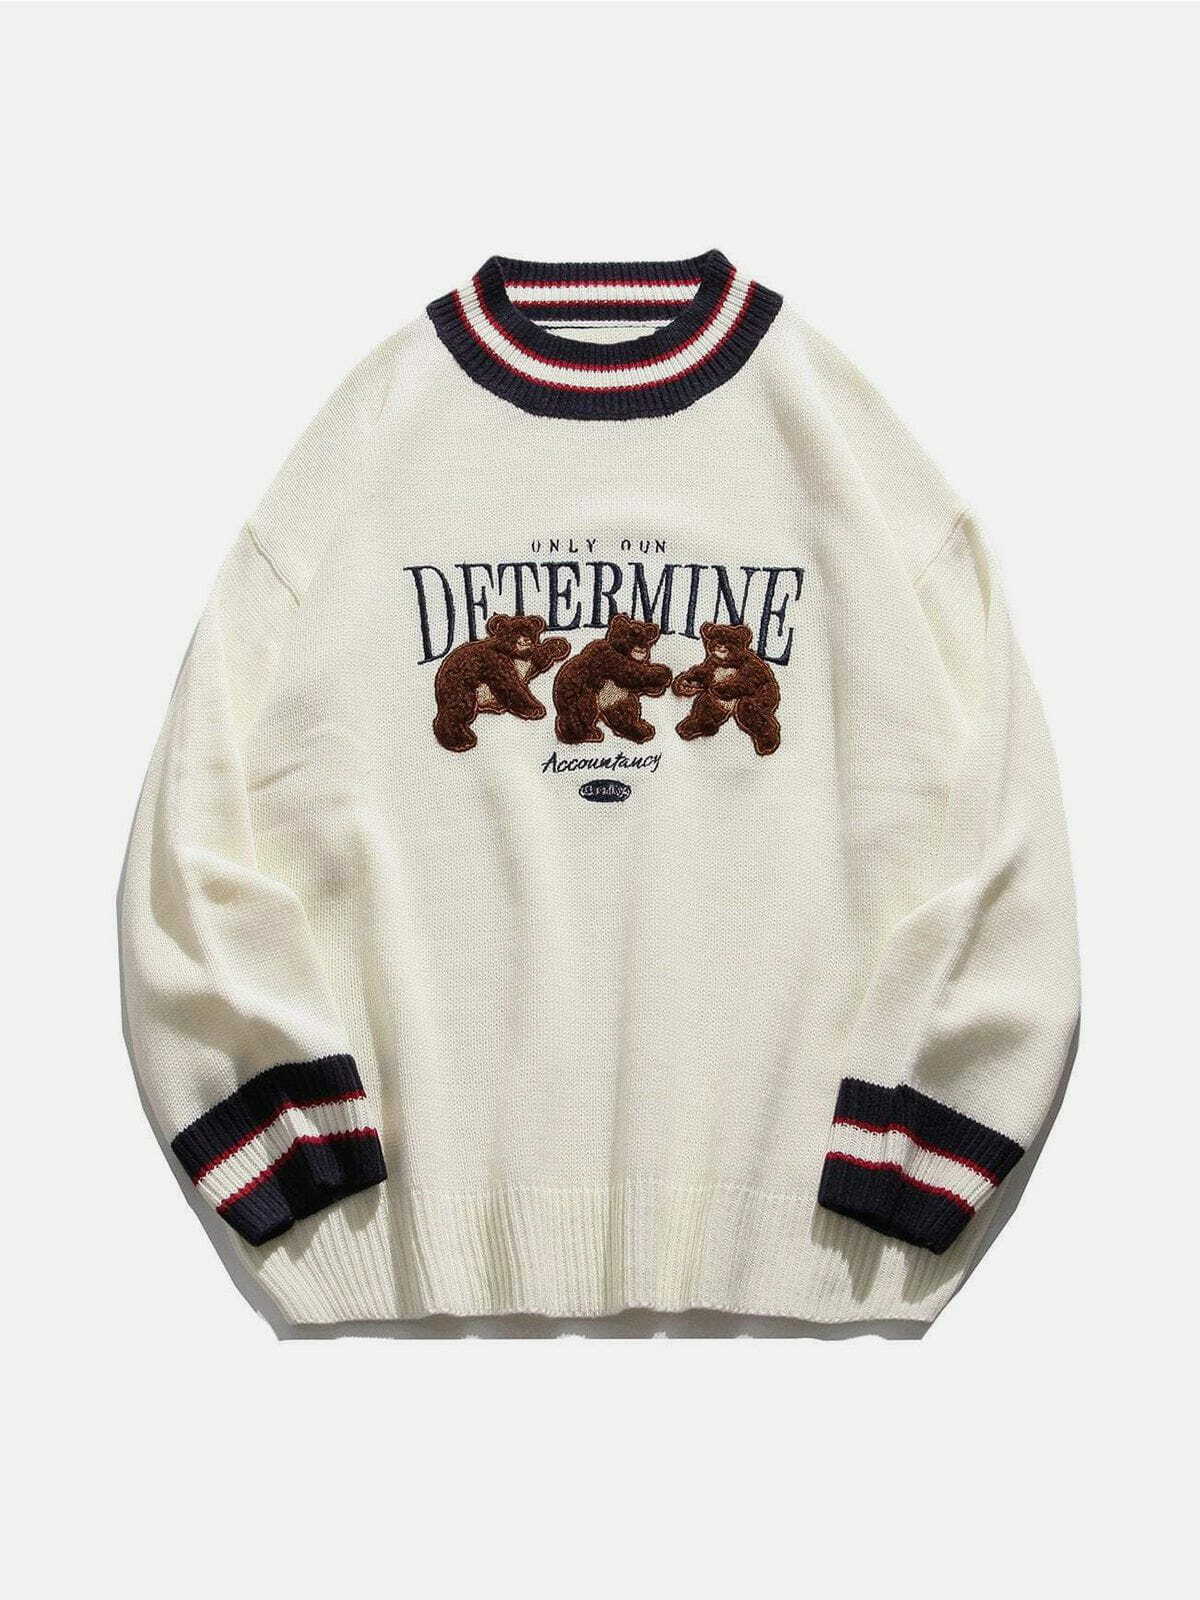 retro patchwork sweater quirky & urban fashion statement 8586